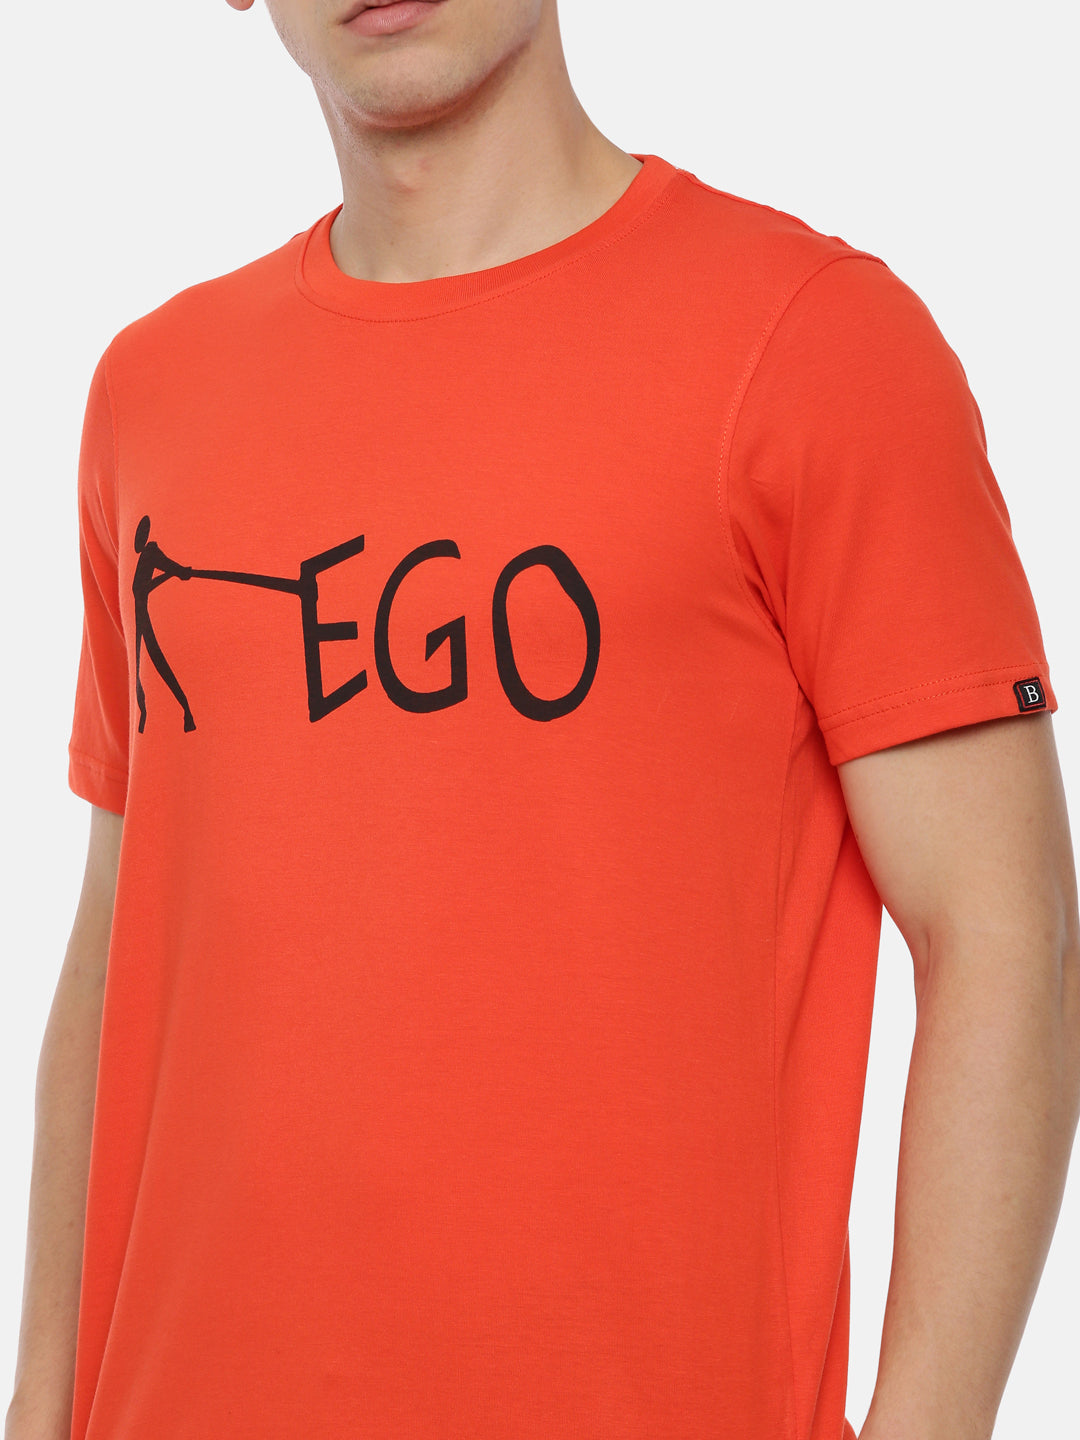 Ego T-Shirt Graphic T-Shirts Bushirt   